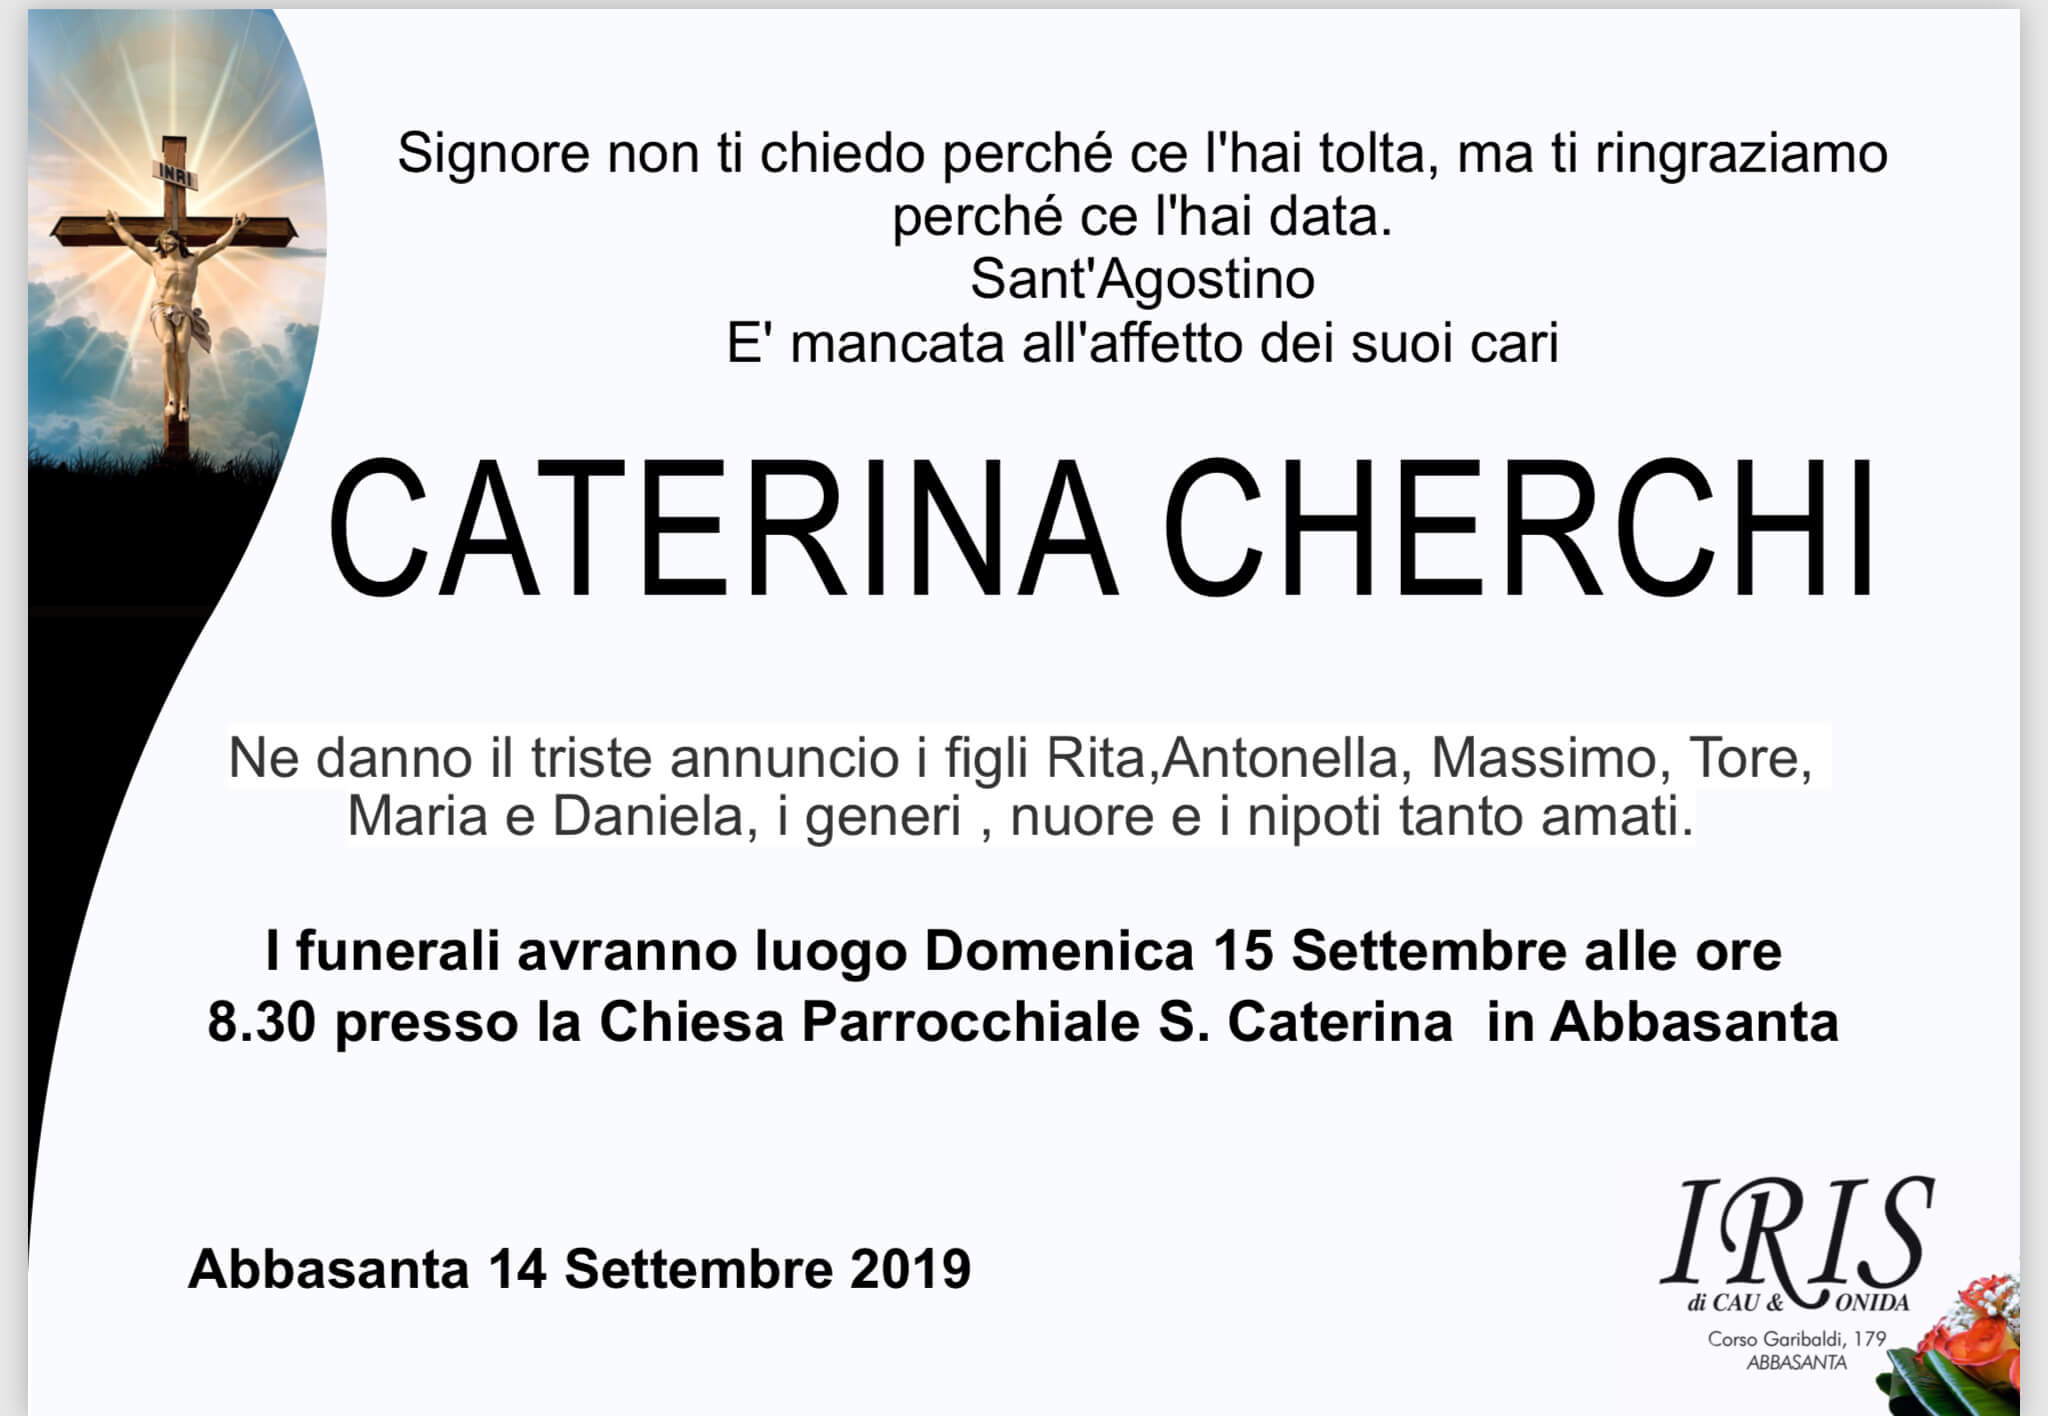 Caterina Cherchi